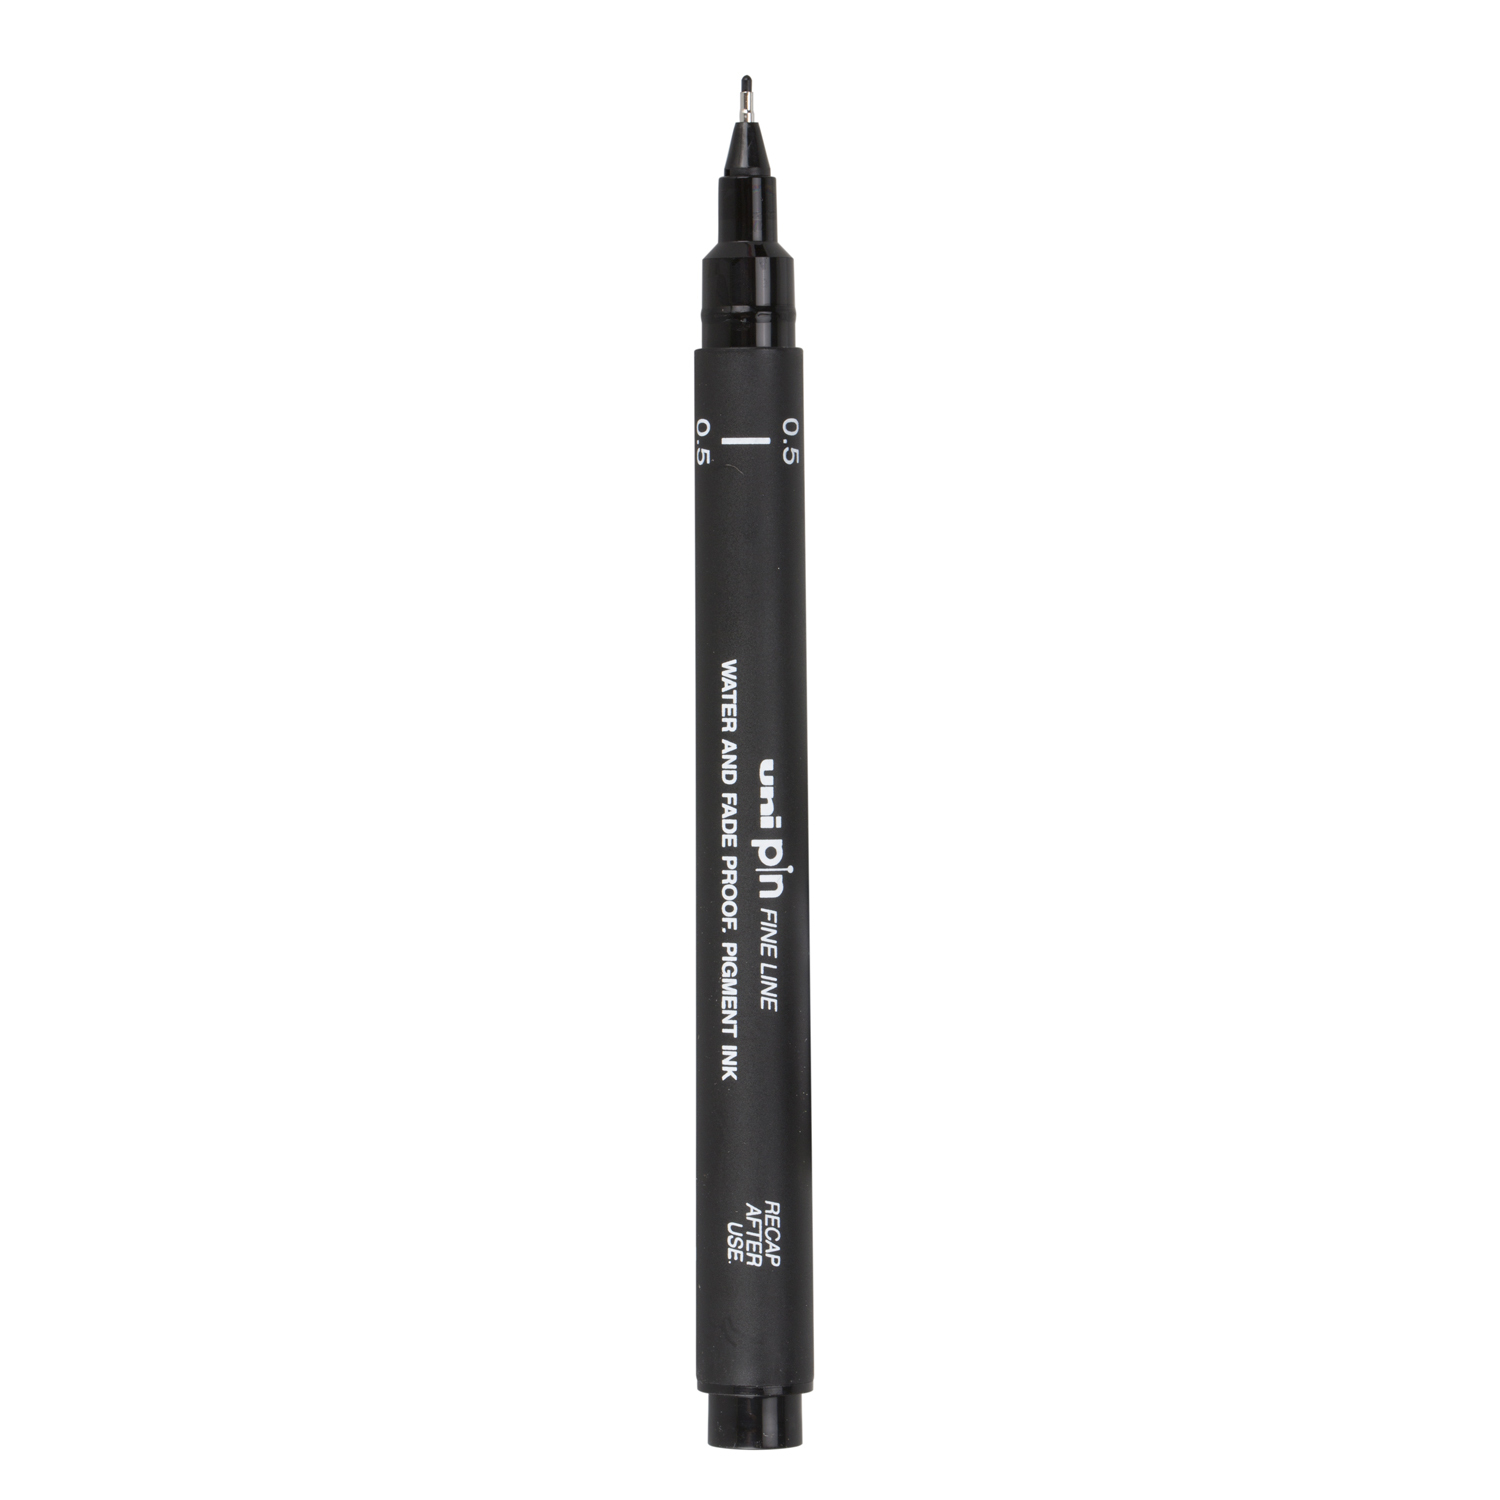 Uniball Pin Fine Liner Drawing Pen - Black / 0.05mm Image 2